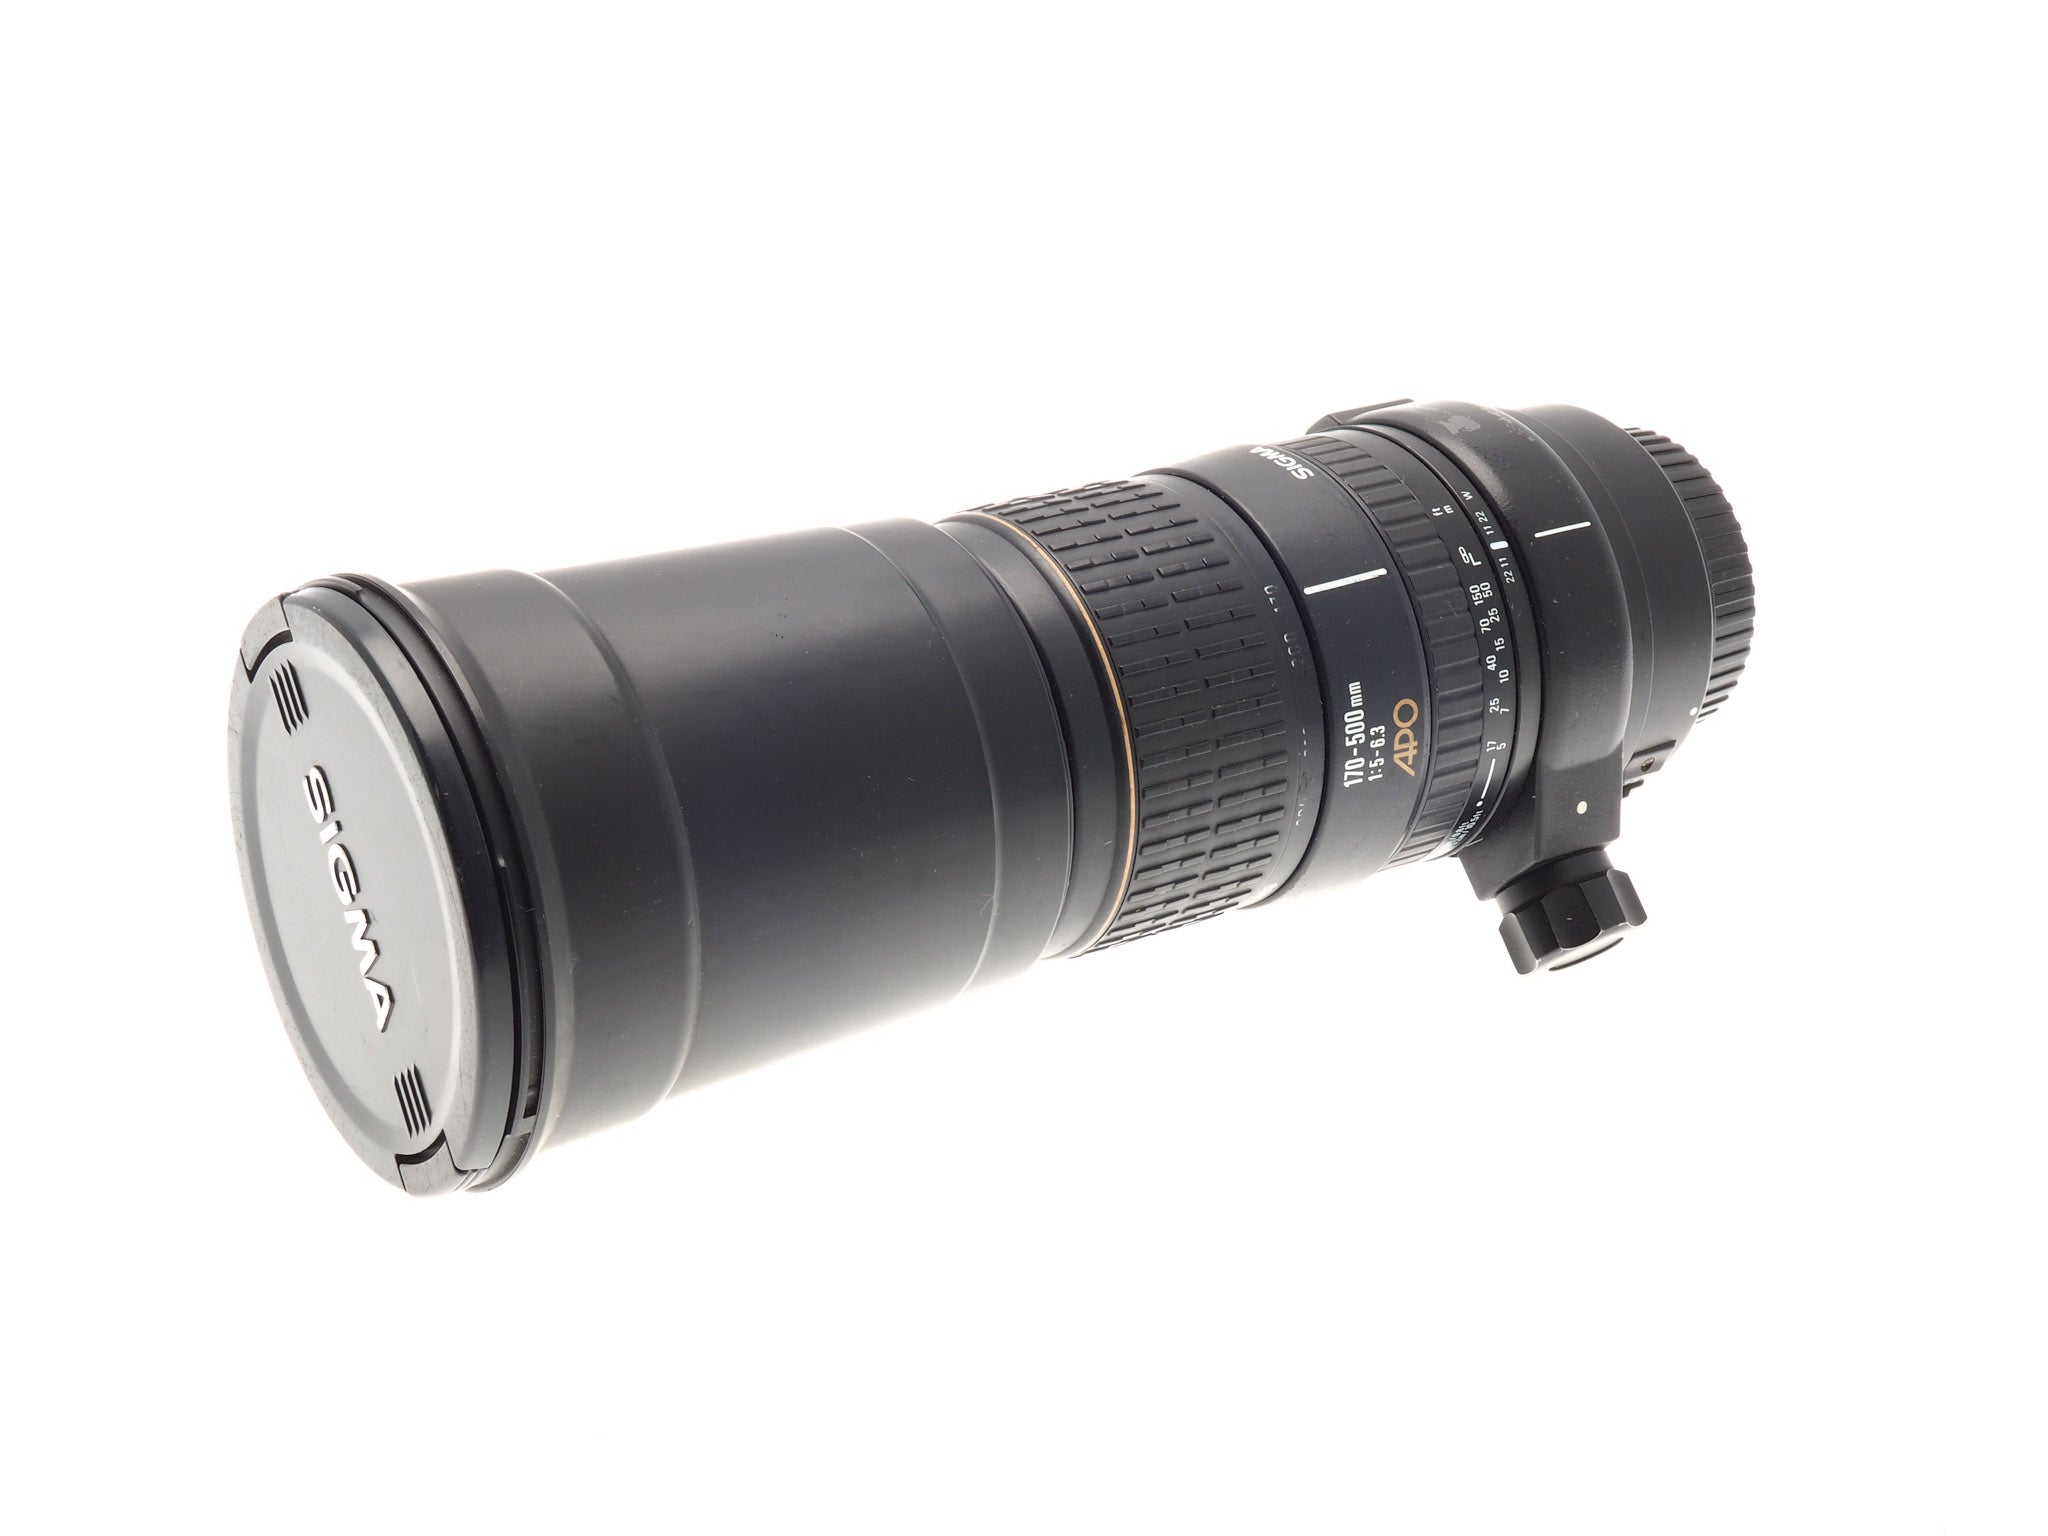 APO SIGMA 170-500mm f 5-6.3 DG CANON - レンズ(ズーム)